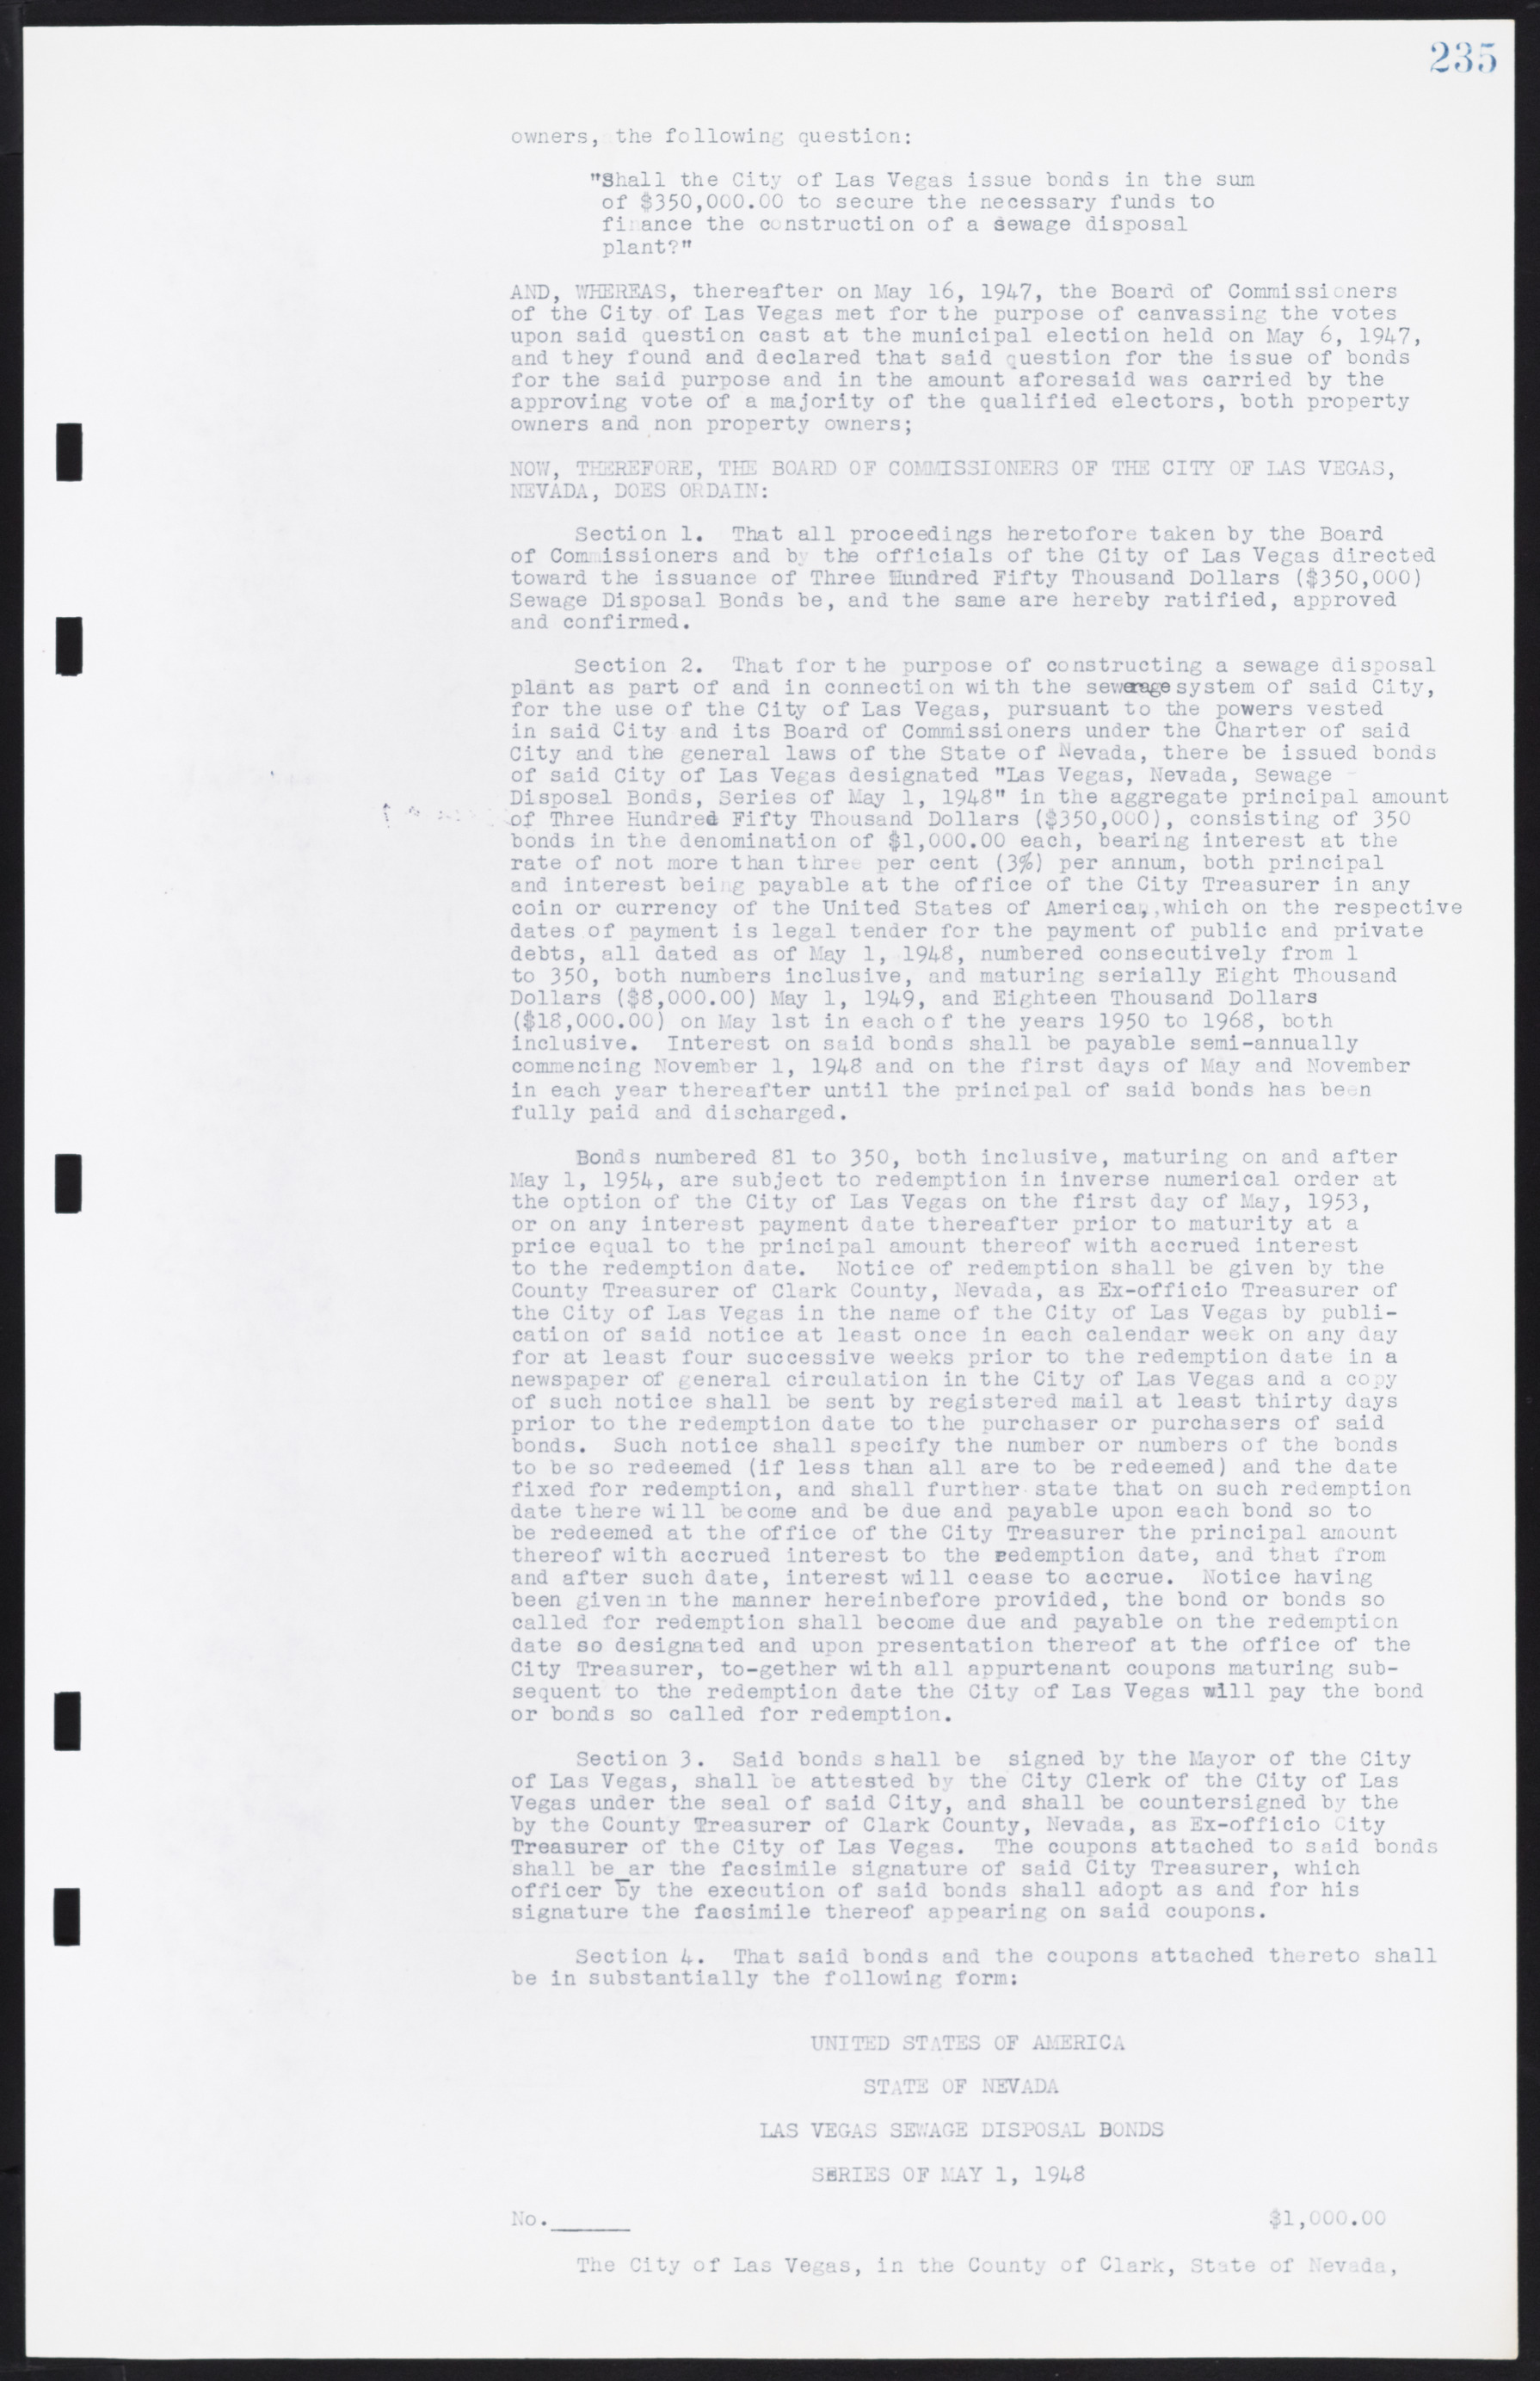 Las Vegas City Commission Minutes, January 7, 1947 to October 26, 1949, lvc000006-257